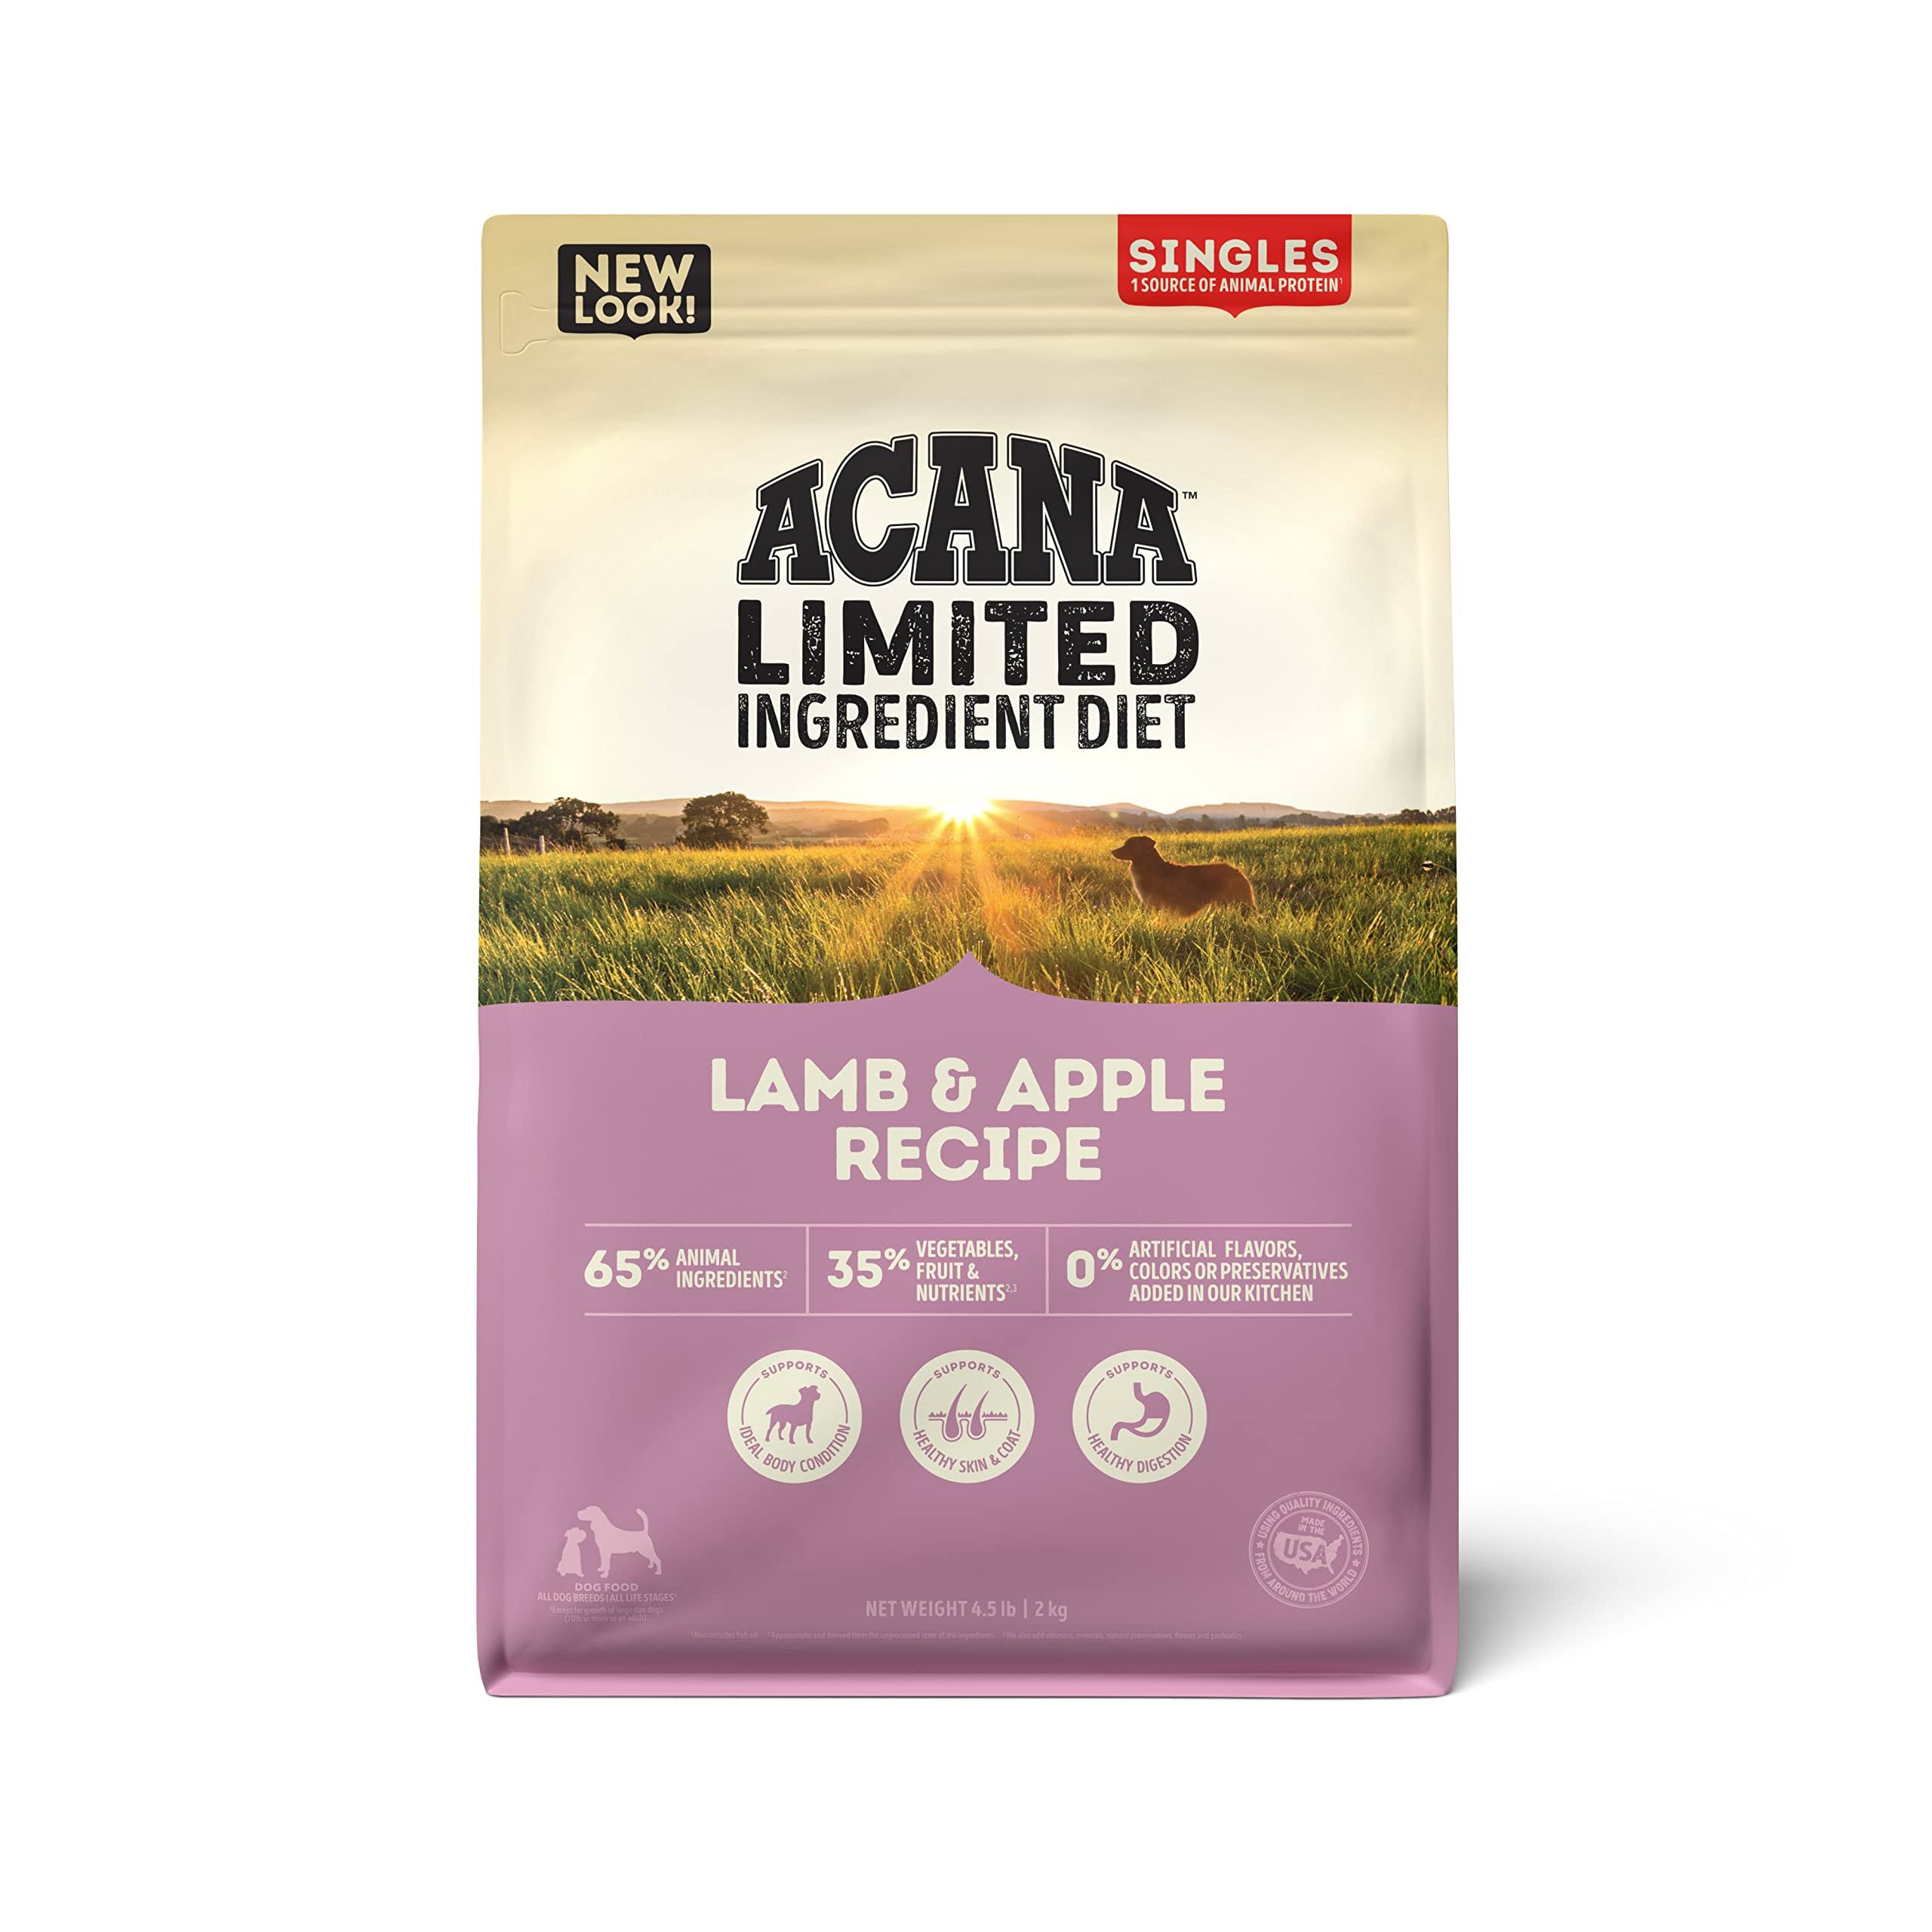 Acana Singles Limited Ingredient Lamb & Apple Recipe Grain-Free Dry Dog Food - 4.5 lb. Bag